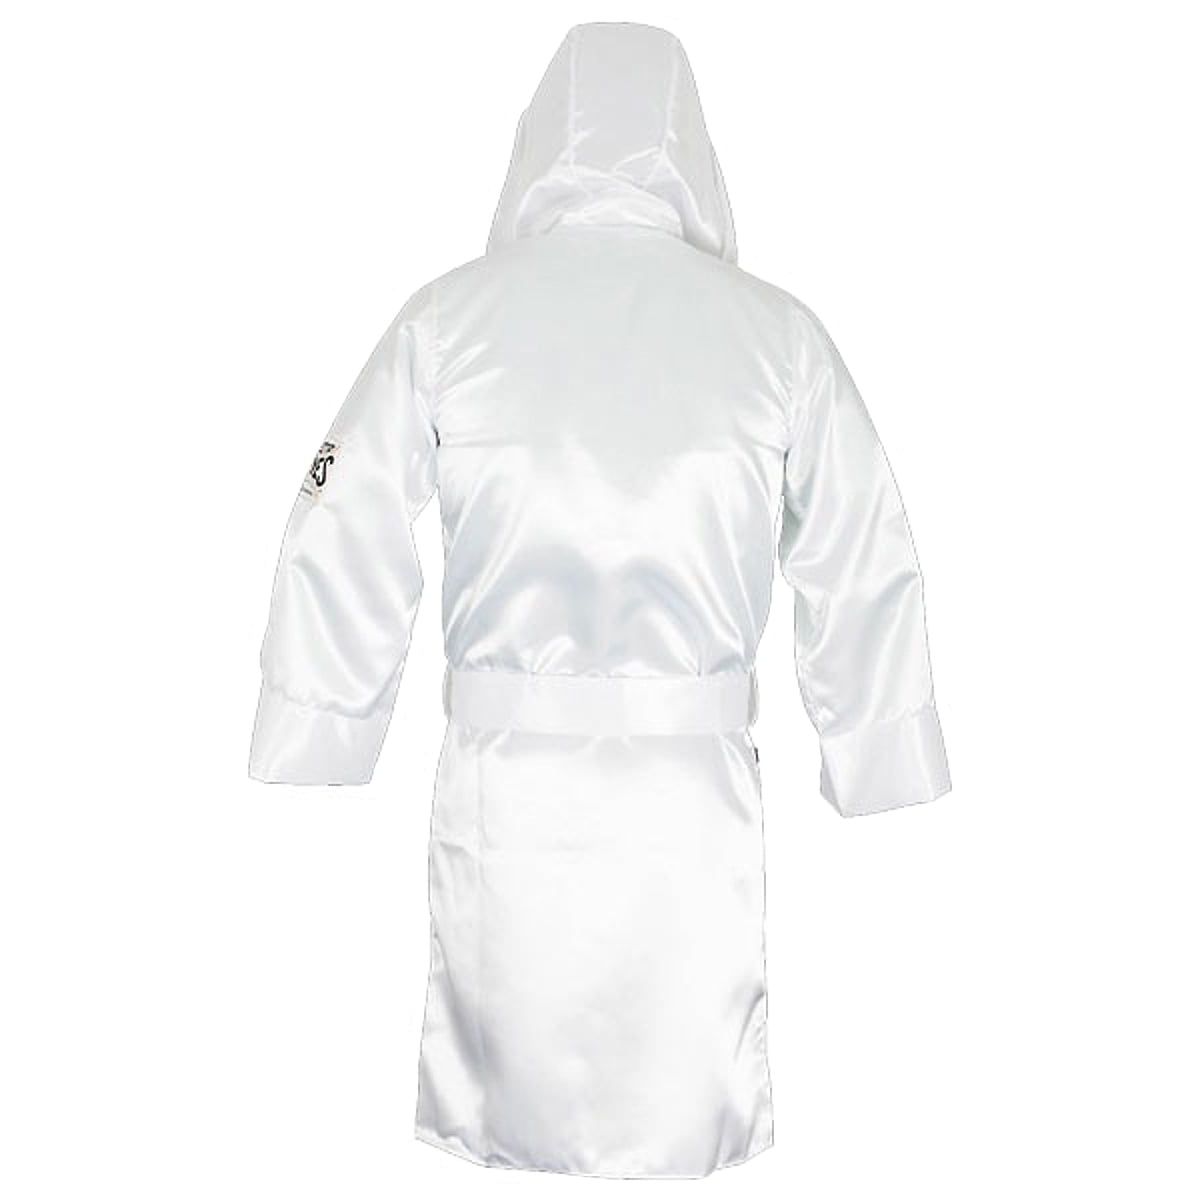 Cleto Reyes Satin Boxing Robe with Hood White 